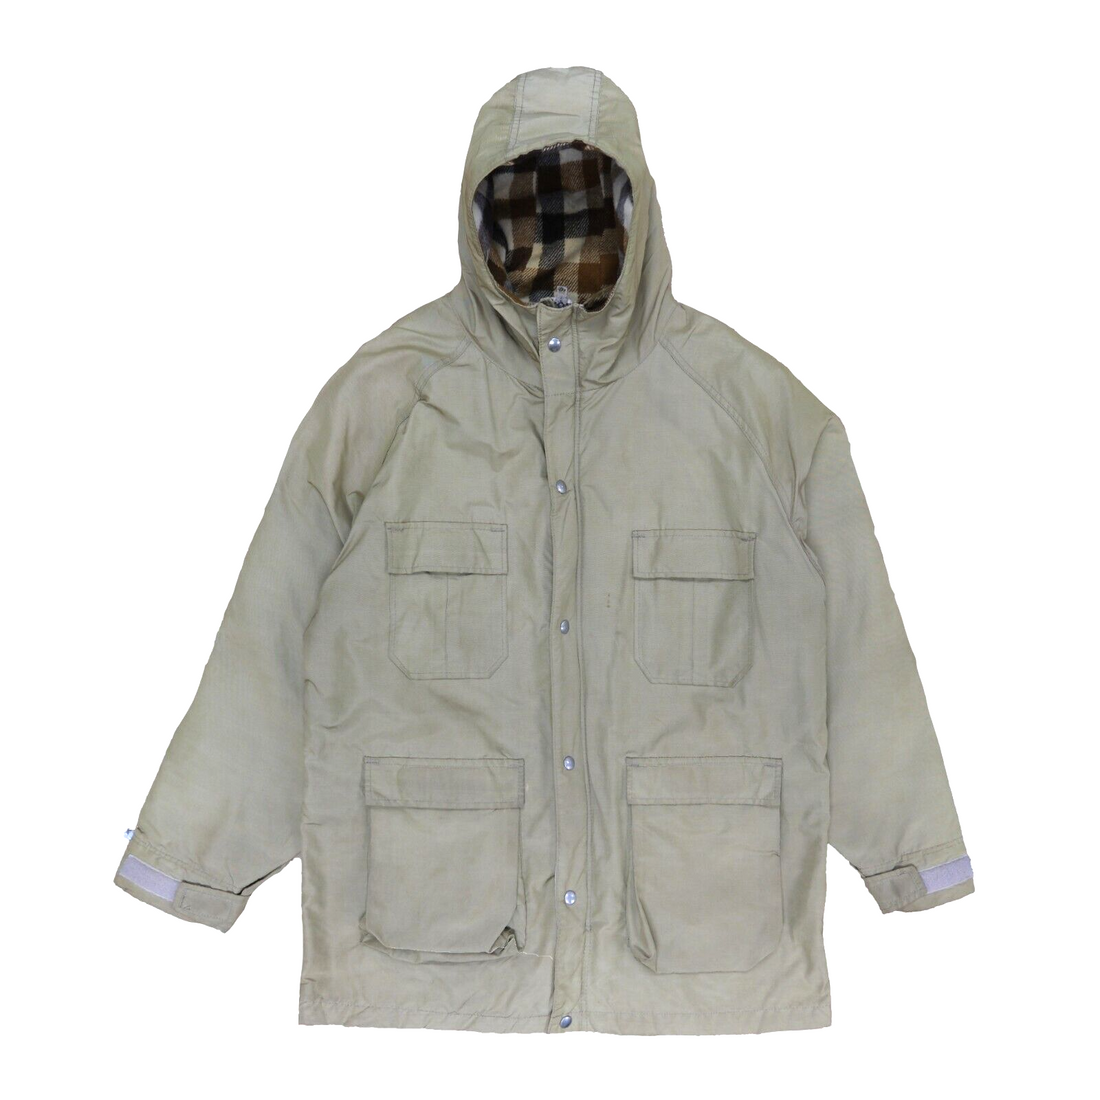 Vintage LL Bean Baxter State Parka Coat Jacket Size XL Beige Plaid Lined